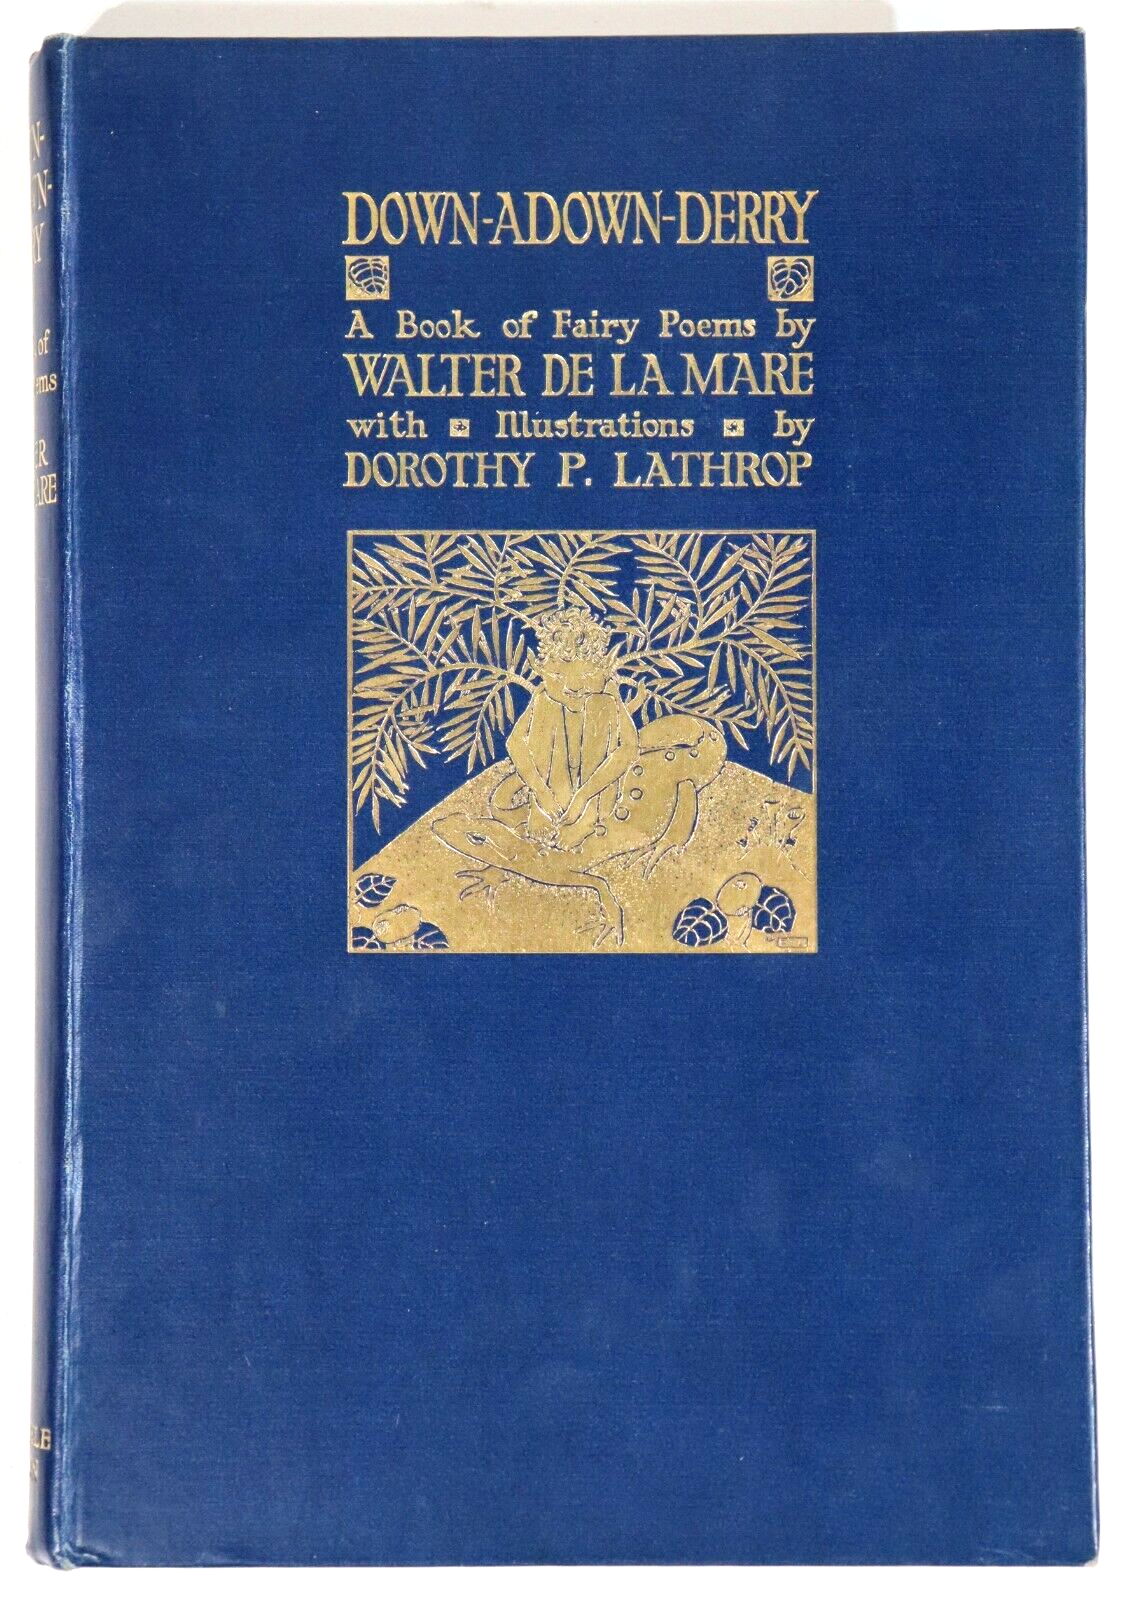 Down-Adown-Derry: Walter De La Mare - 1922 - 1st Edition Literature Book